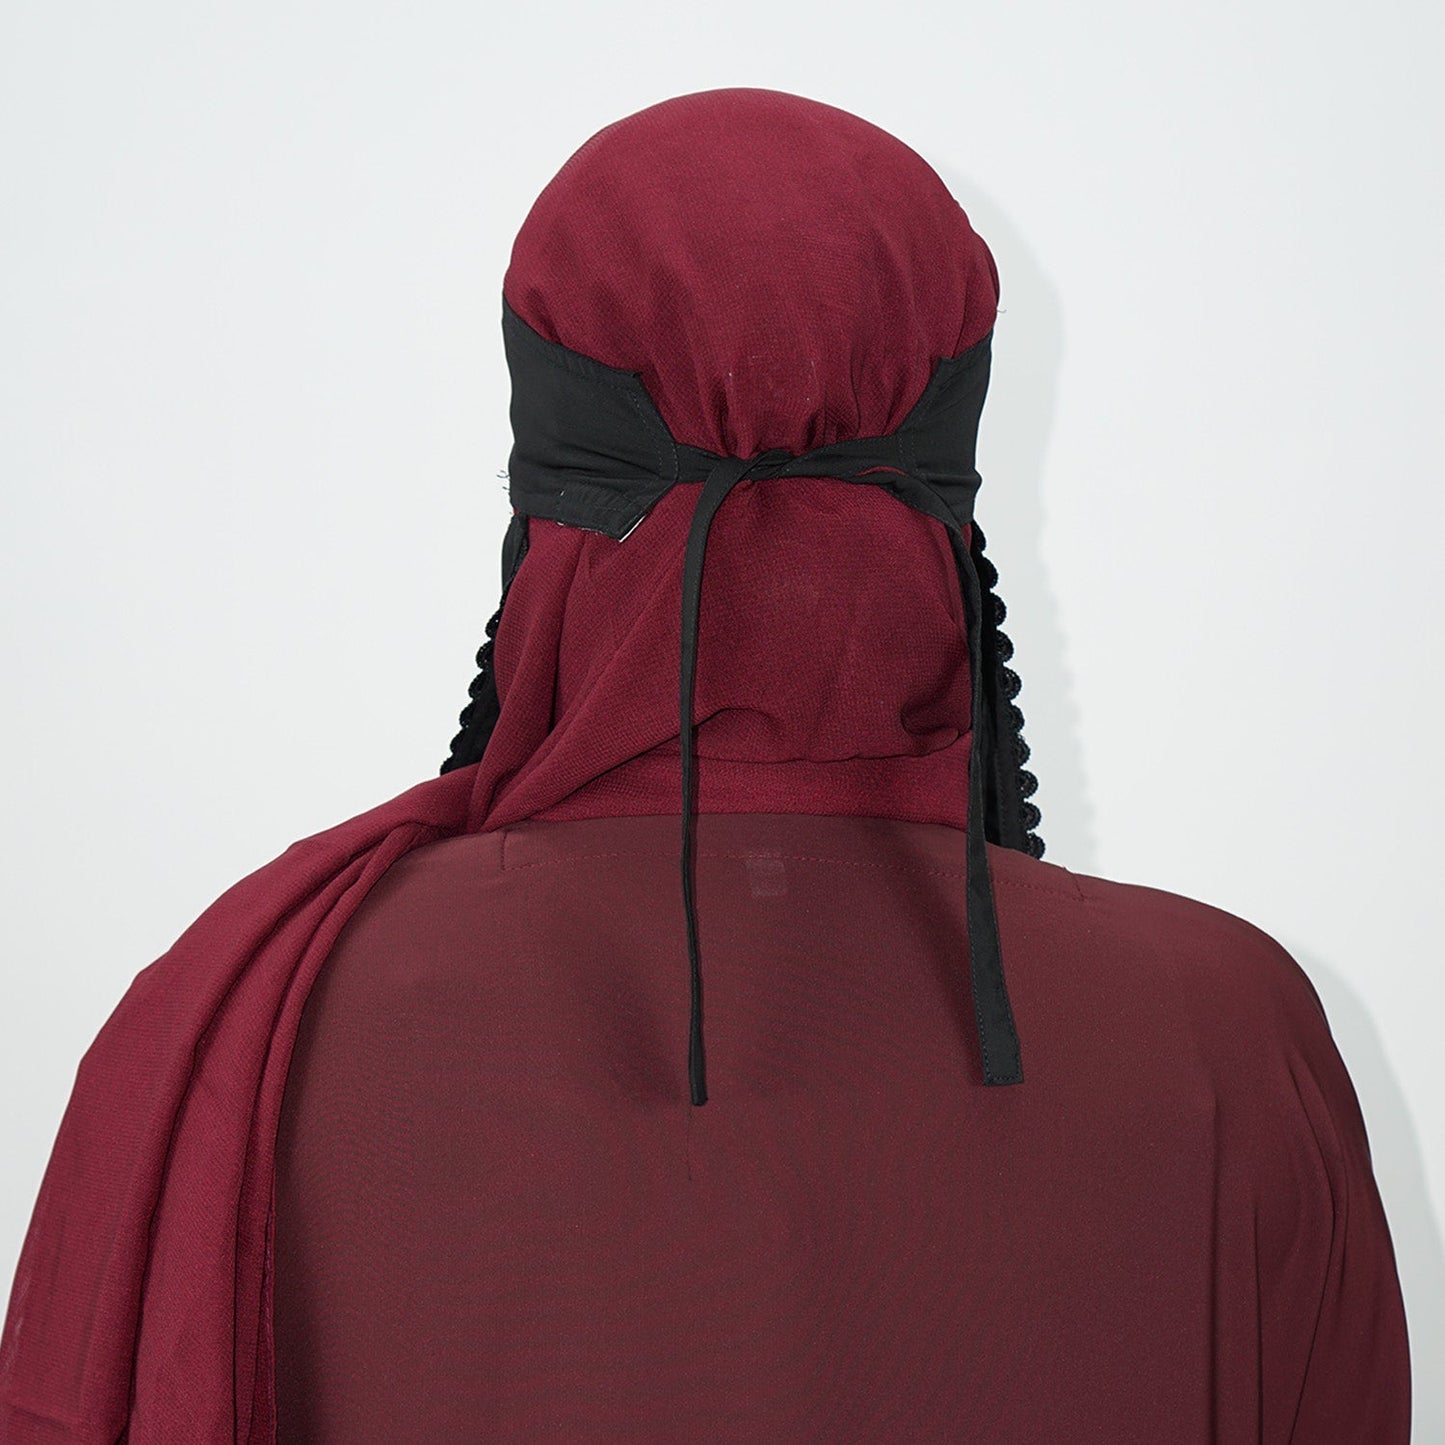 1 Layer Tie Back Niqab Black Lace-almanaar Islamic Store